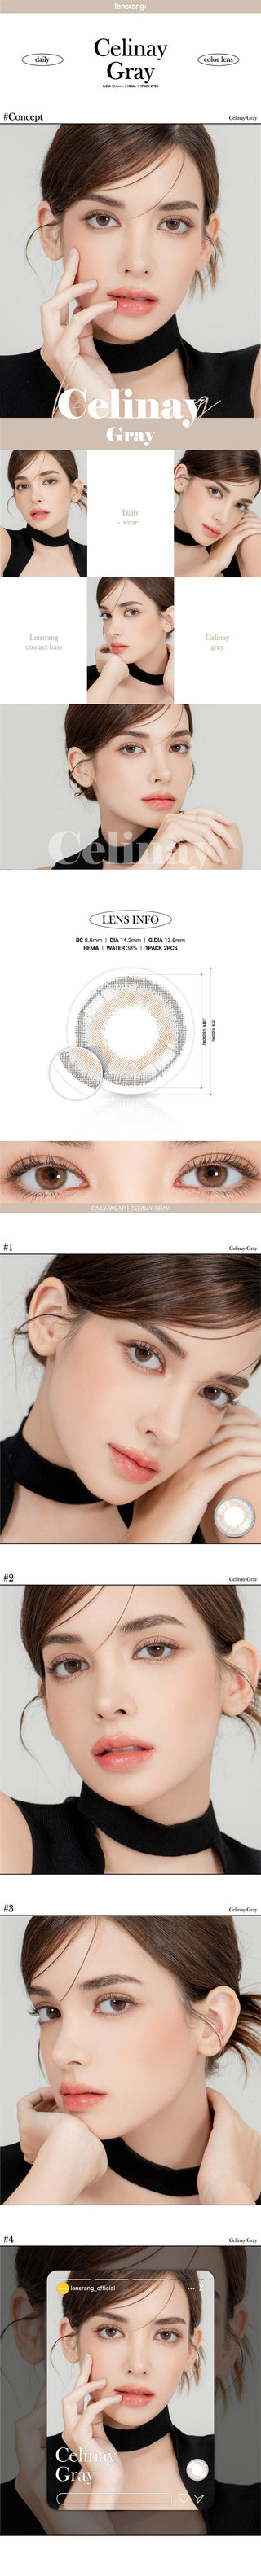 Lensrang Celinay Grey Color Contact Lens - EyeCandys